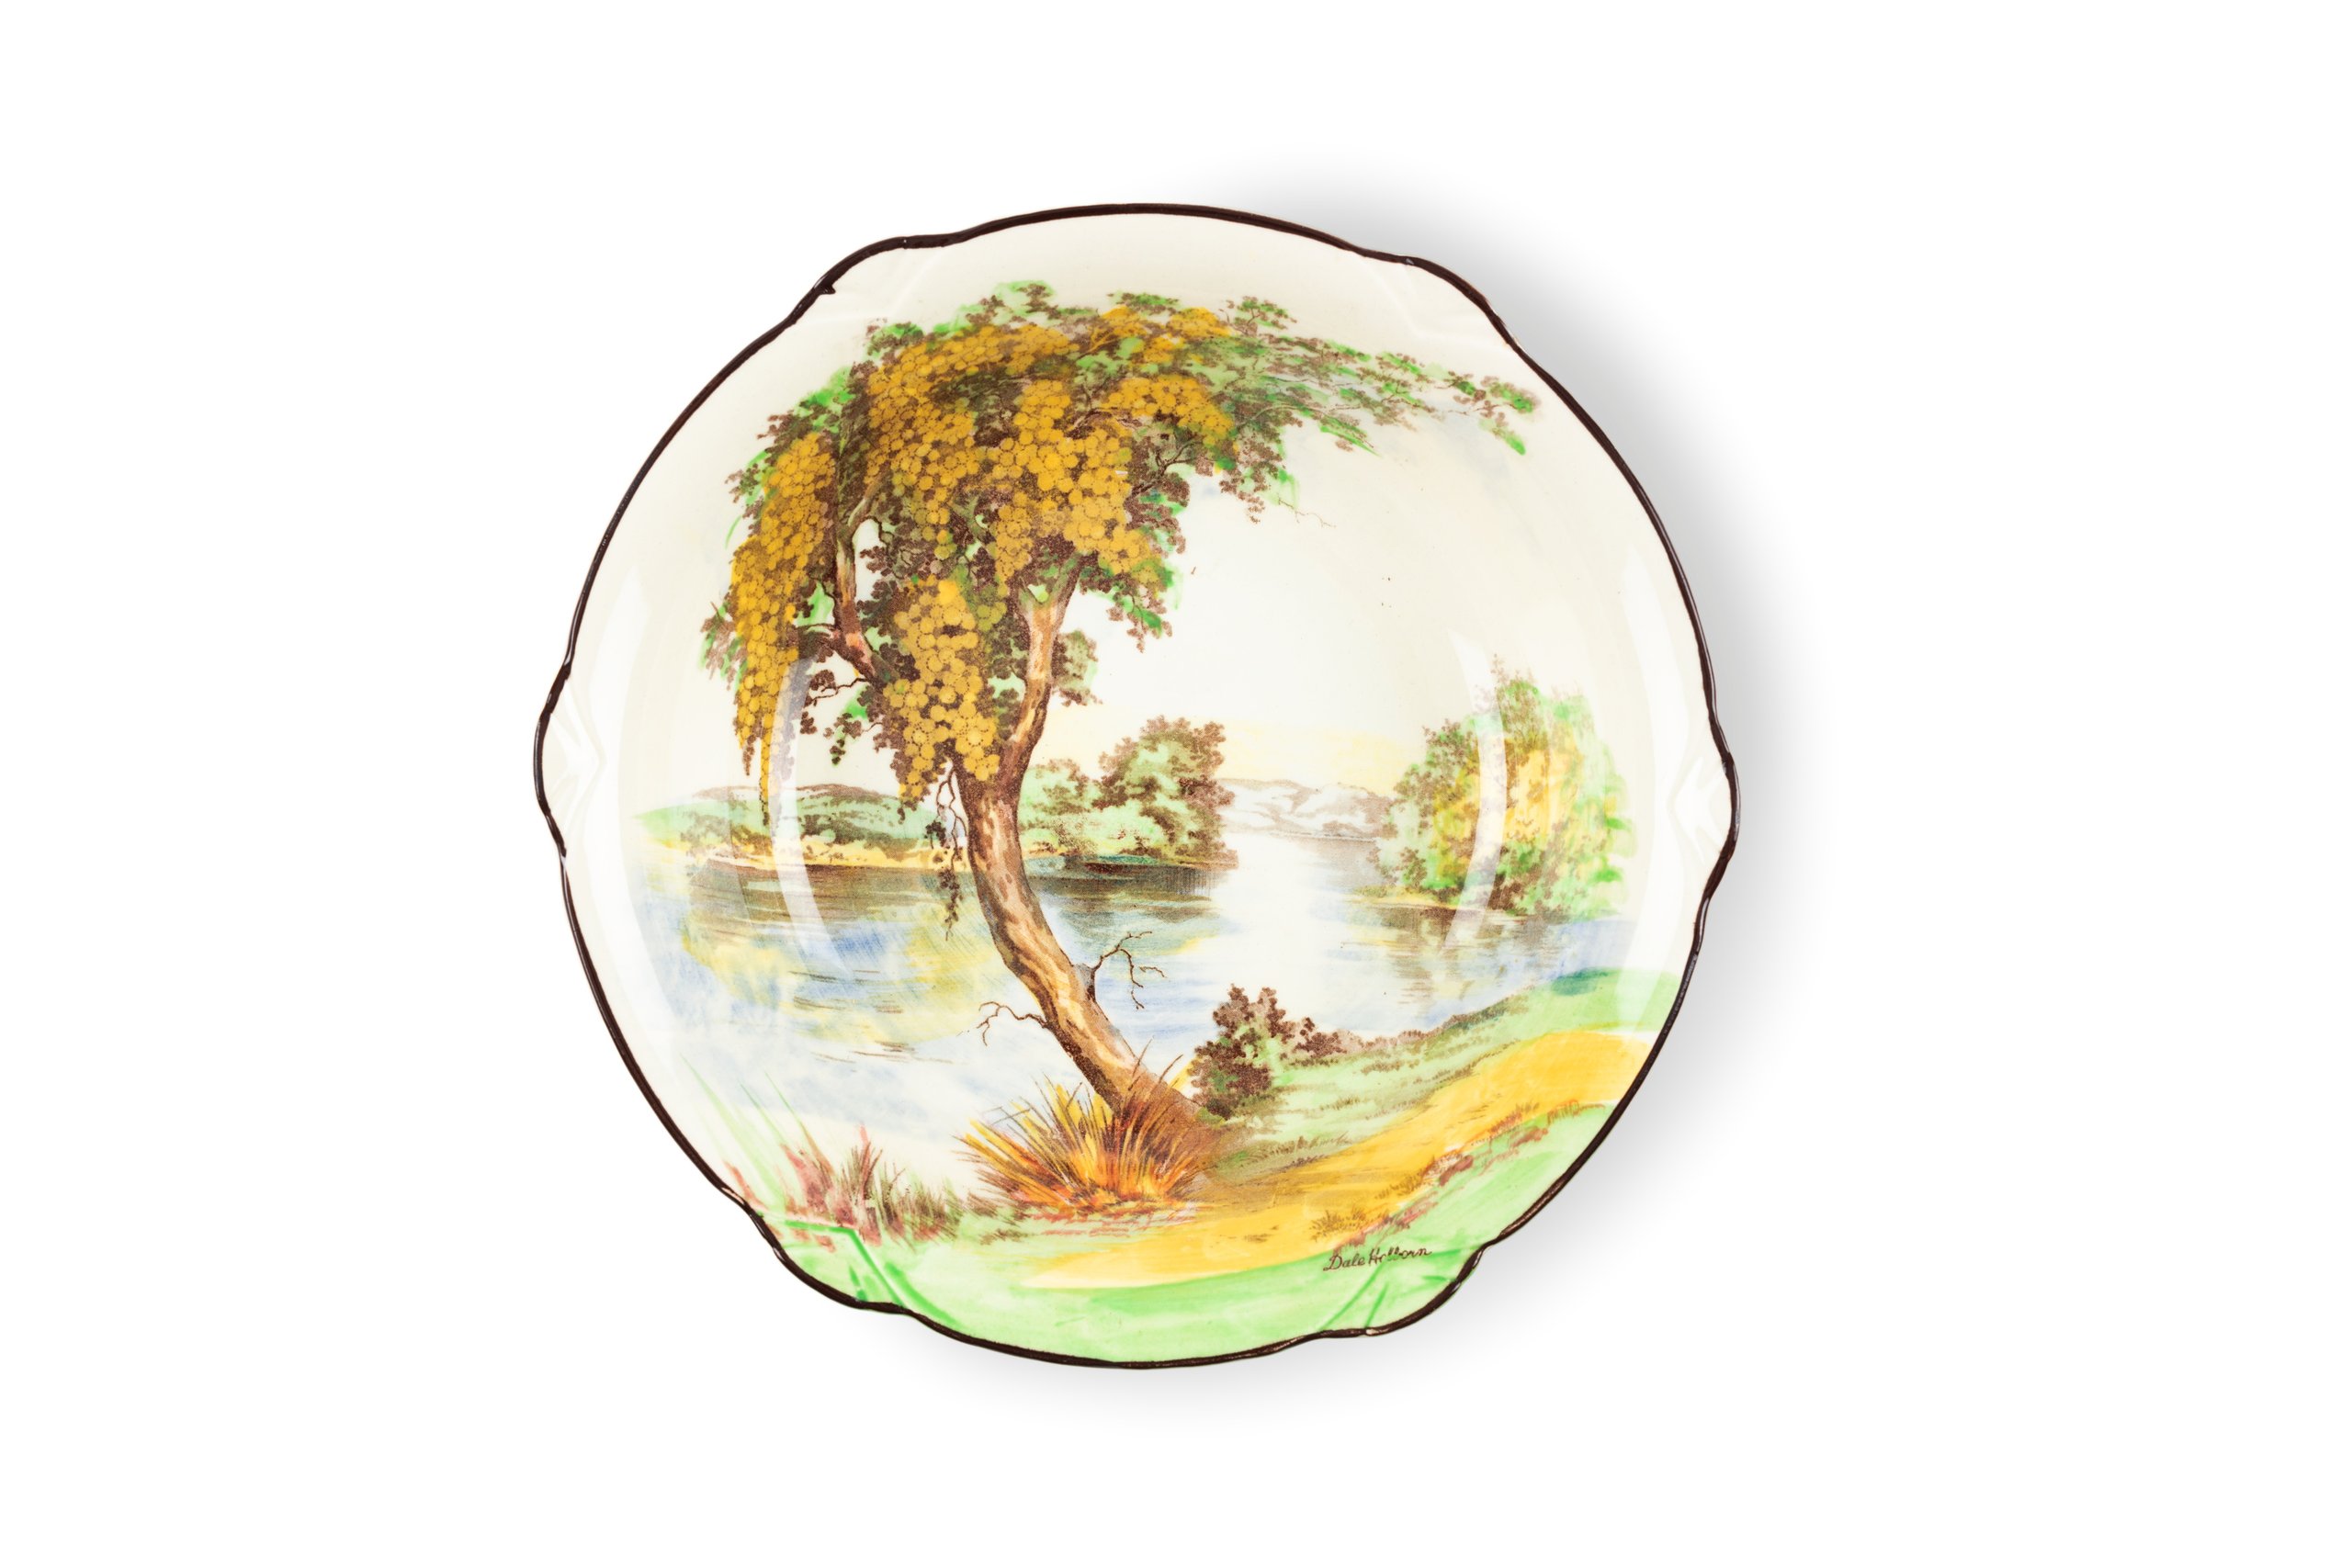 Porcelain dish with handpainted landscape scene